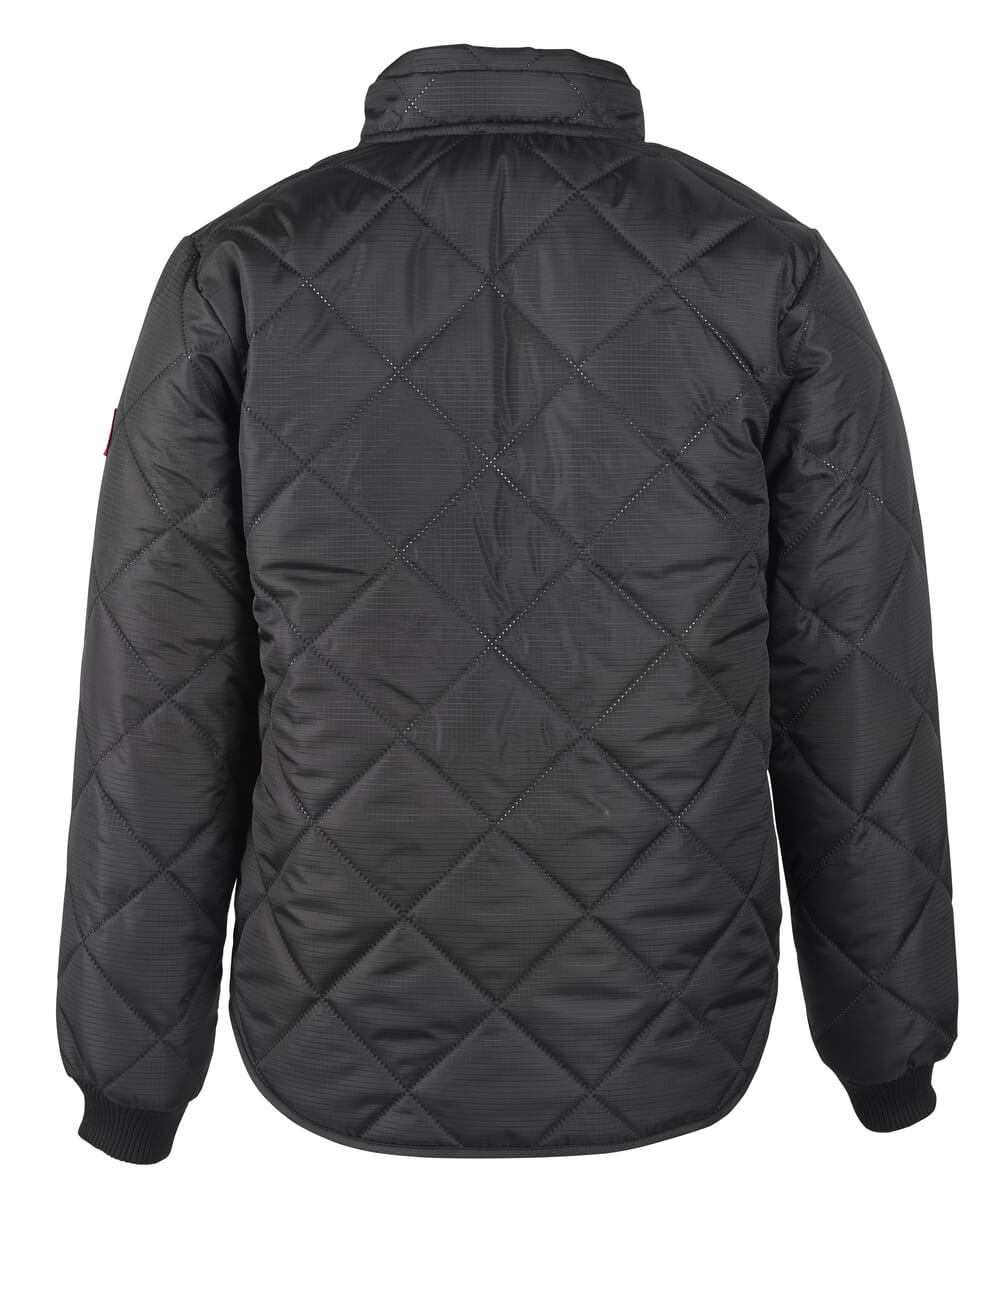 Mascot ORIGINALS  Sudbury Thermal jacket 13515 black